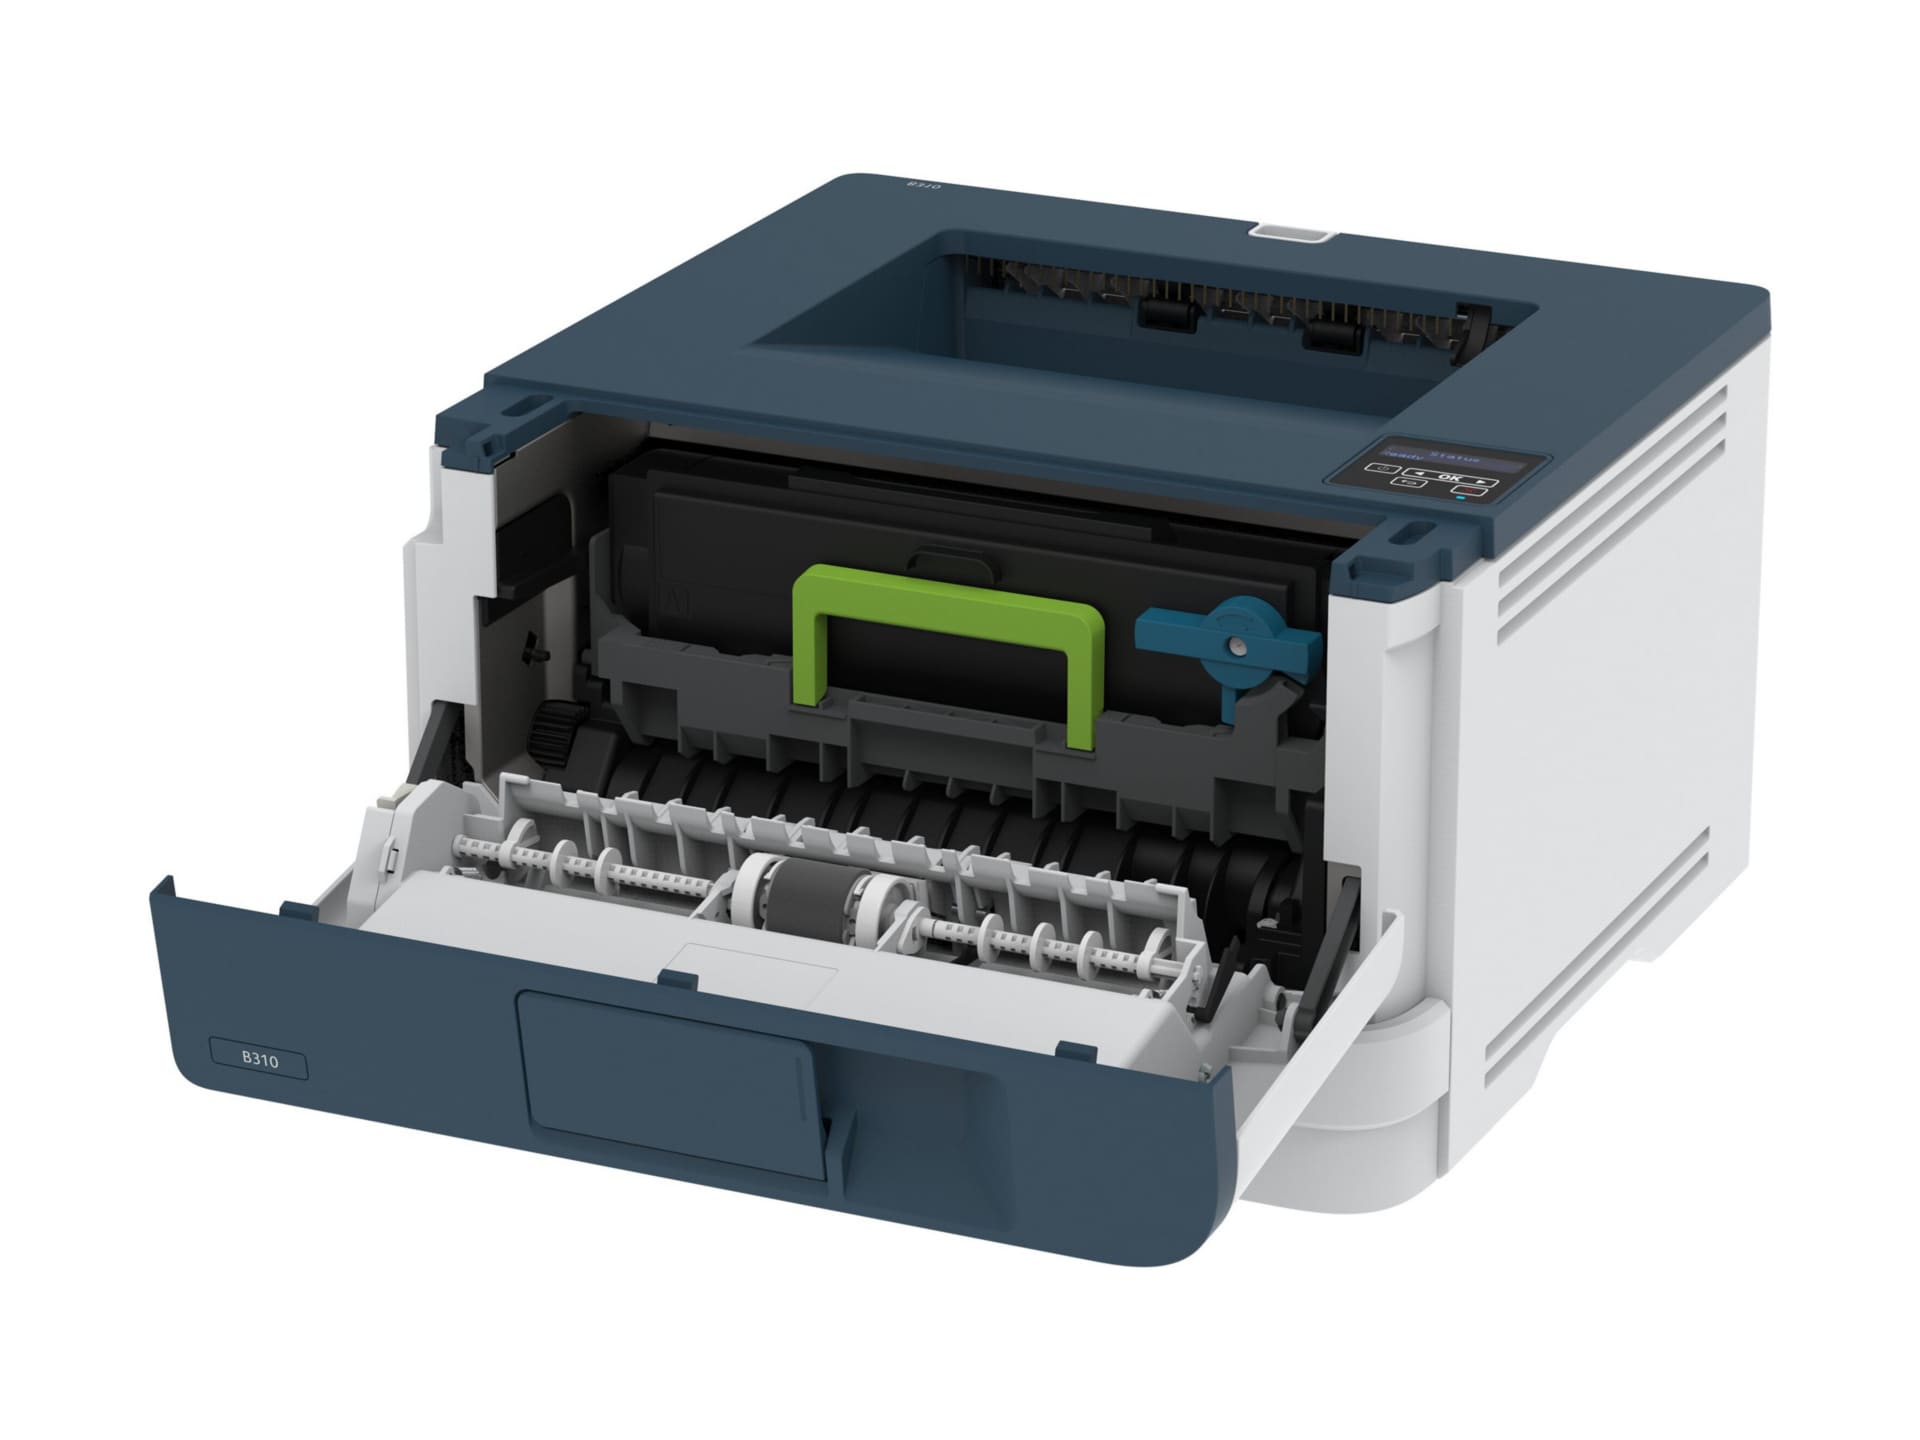 Xerox B310/DNI - printer - B/W - laser